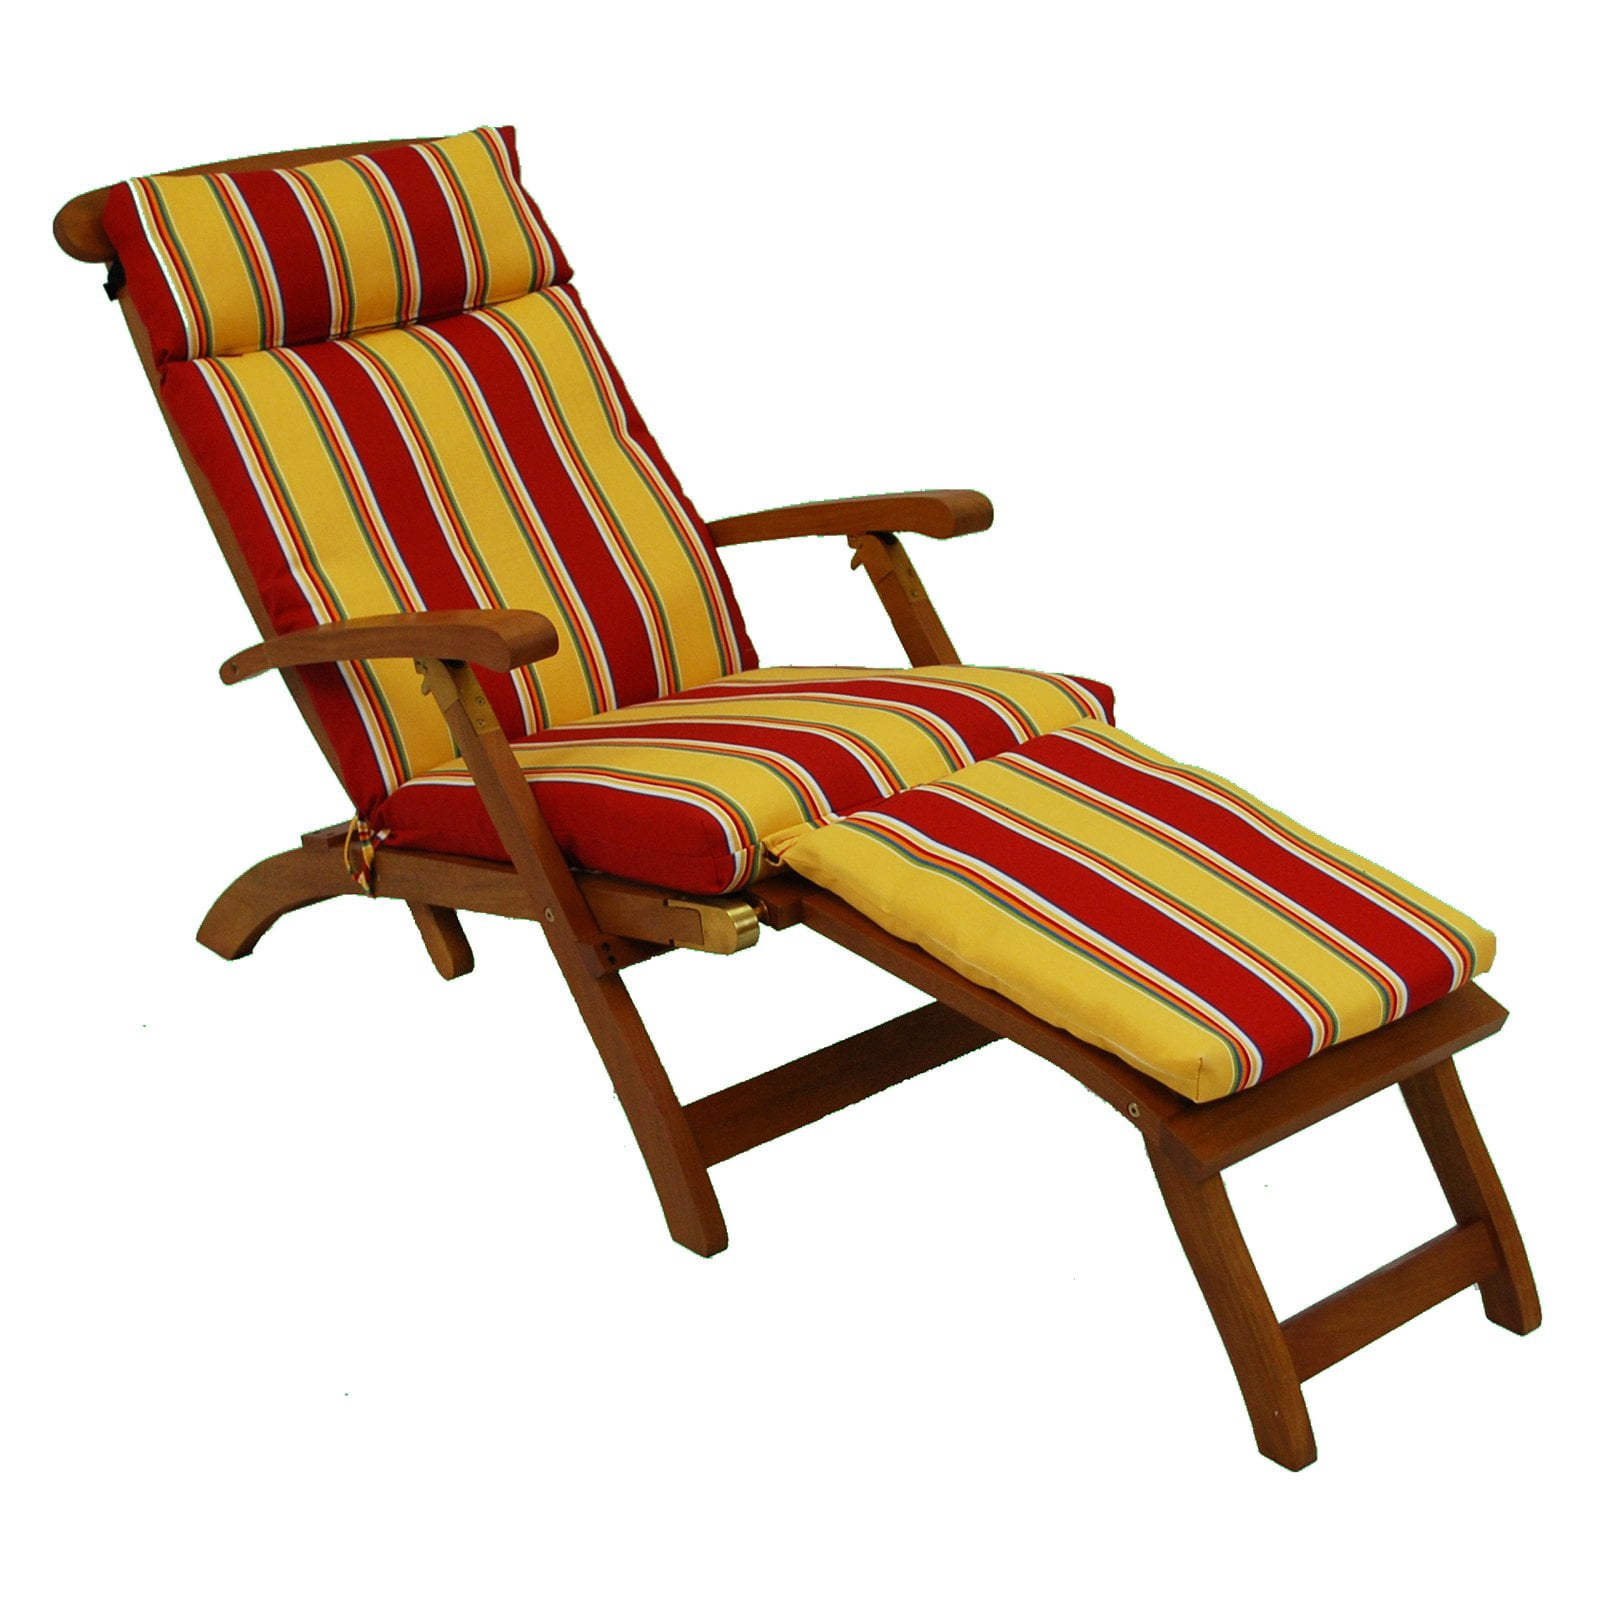 Steamer Garden Chair Cushion Price for 1 x CUSHION ONLY 